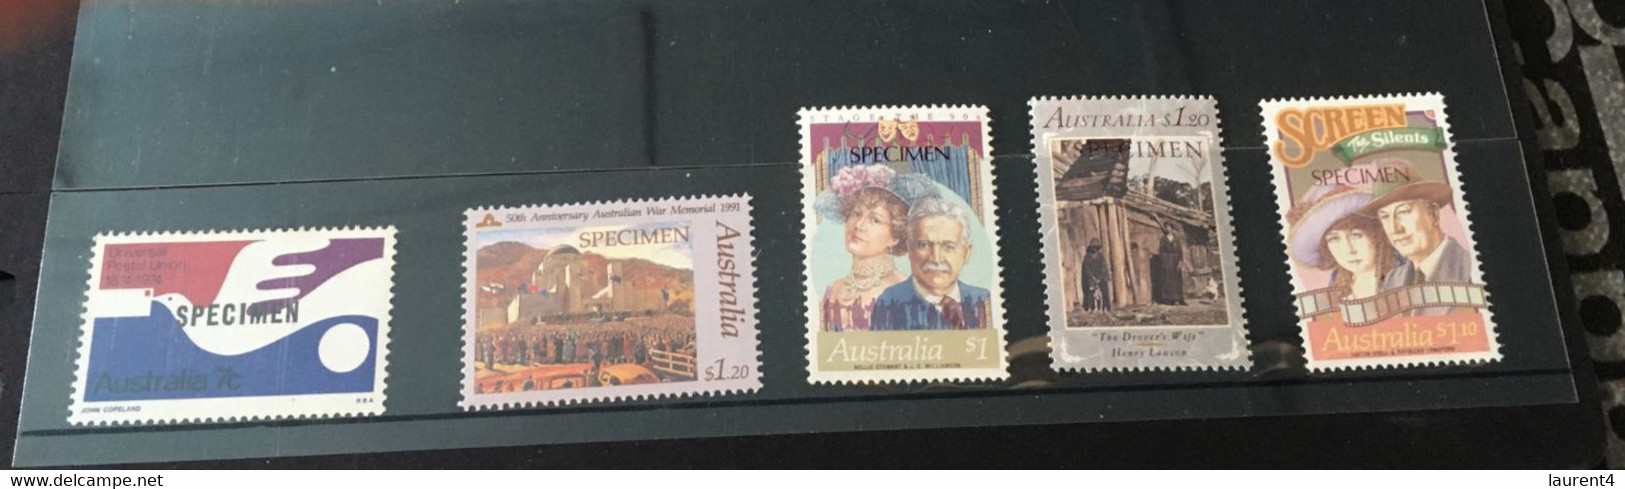 (Stamps 08-03-2021) Selection Of 5 High Values Issues Of SPECIMEN Stamps From Australia - Variétés Et Curiosités